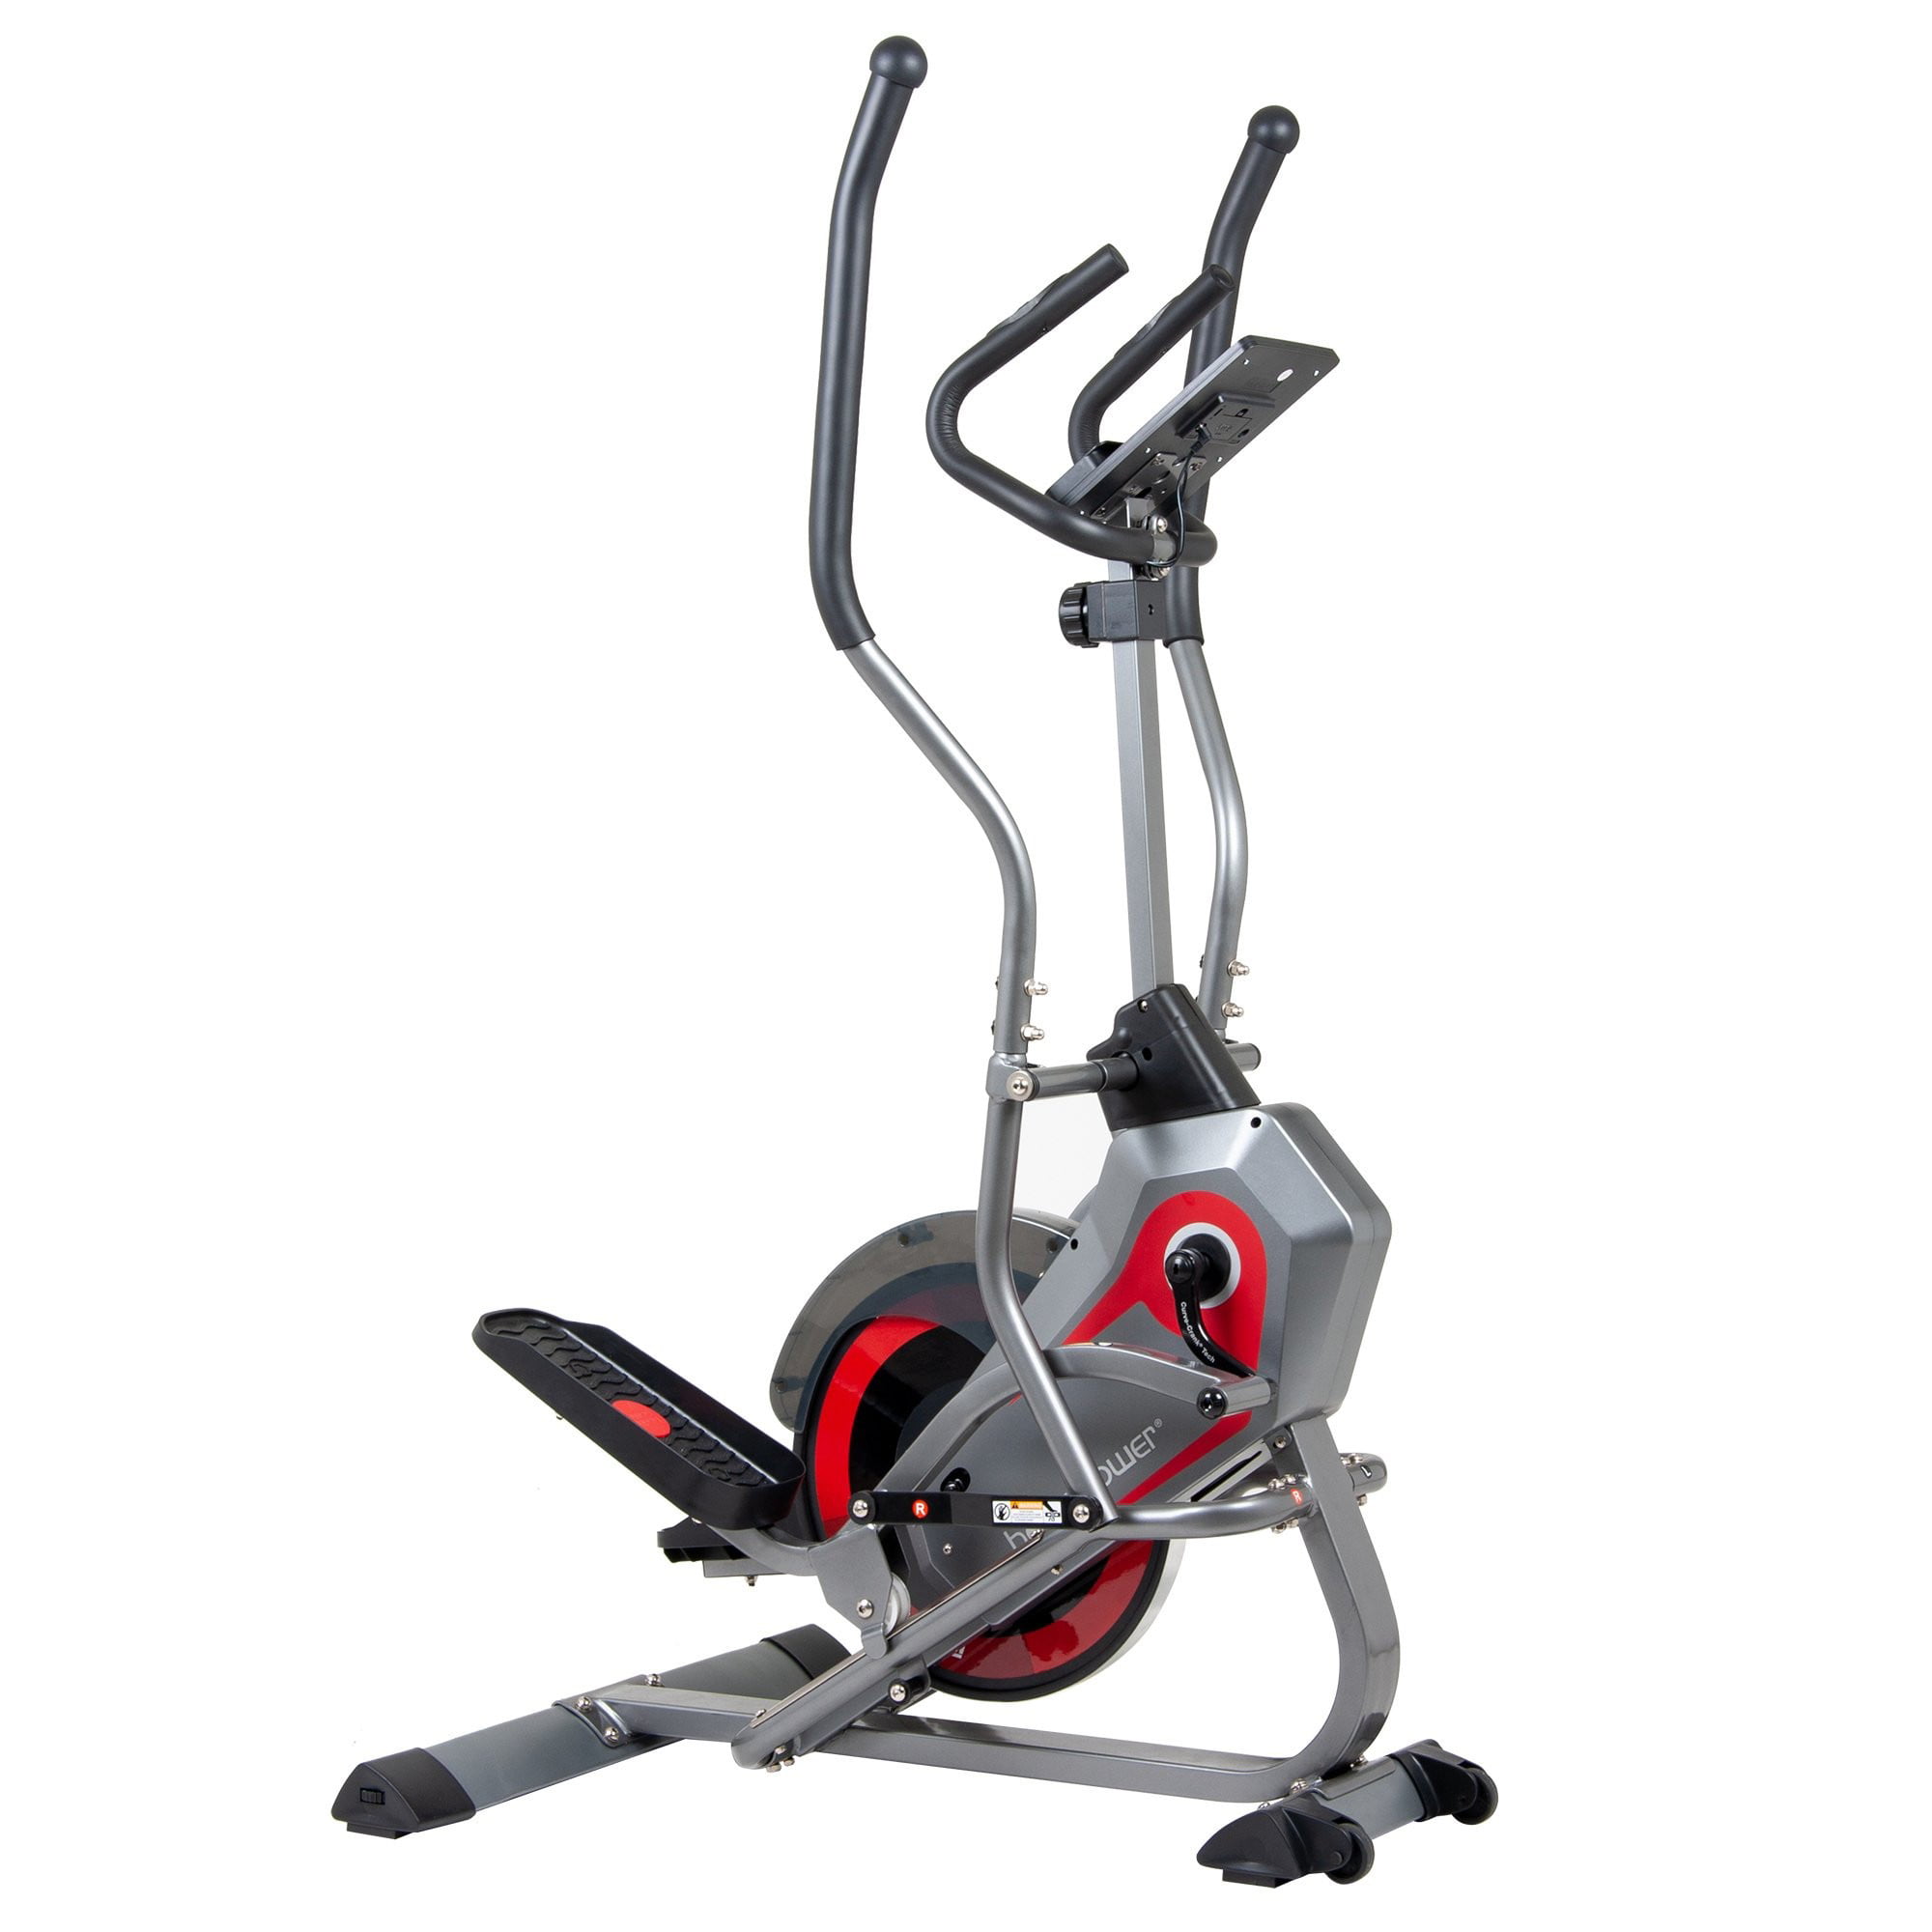 Nautilus E618 Performance Series Home Workout Cardio Elliptical Trainer for sale online 